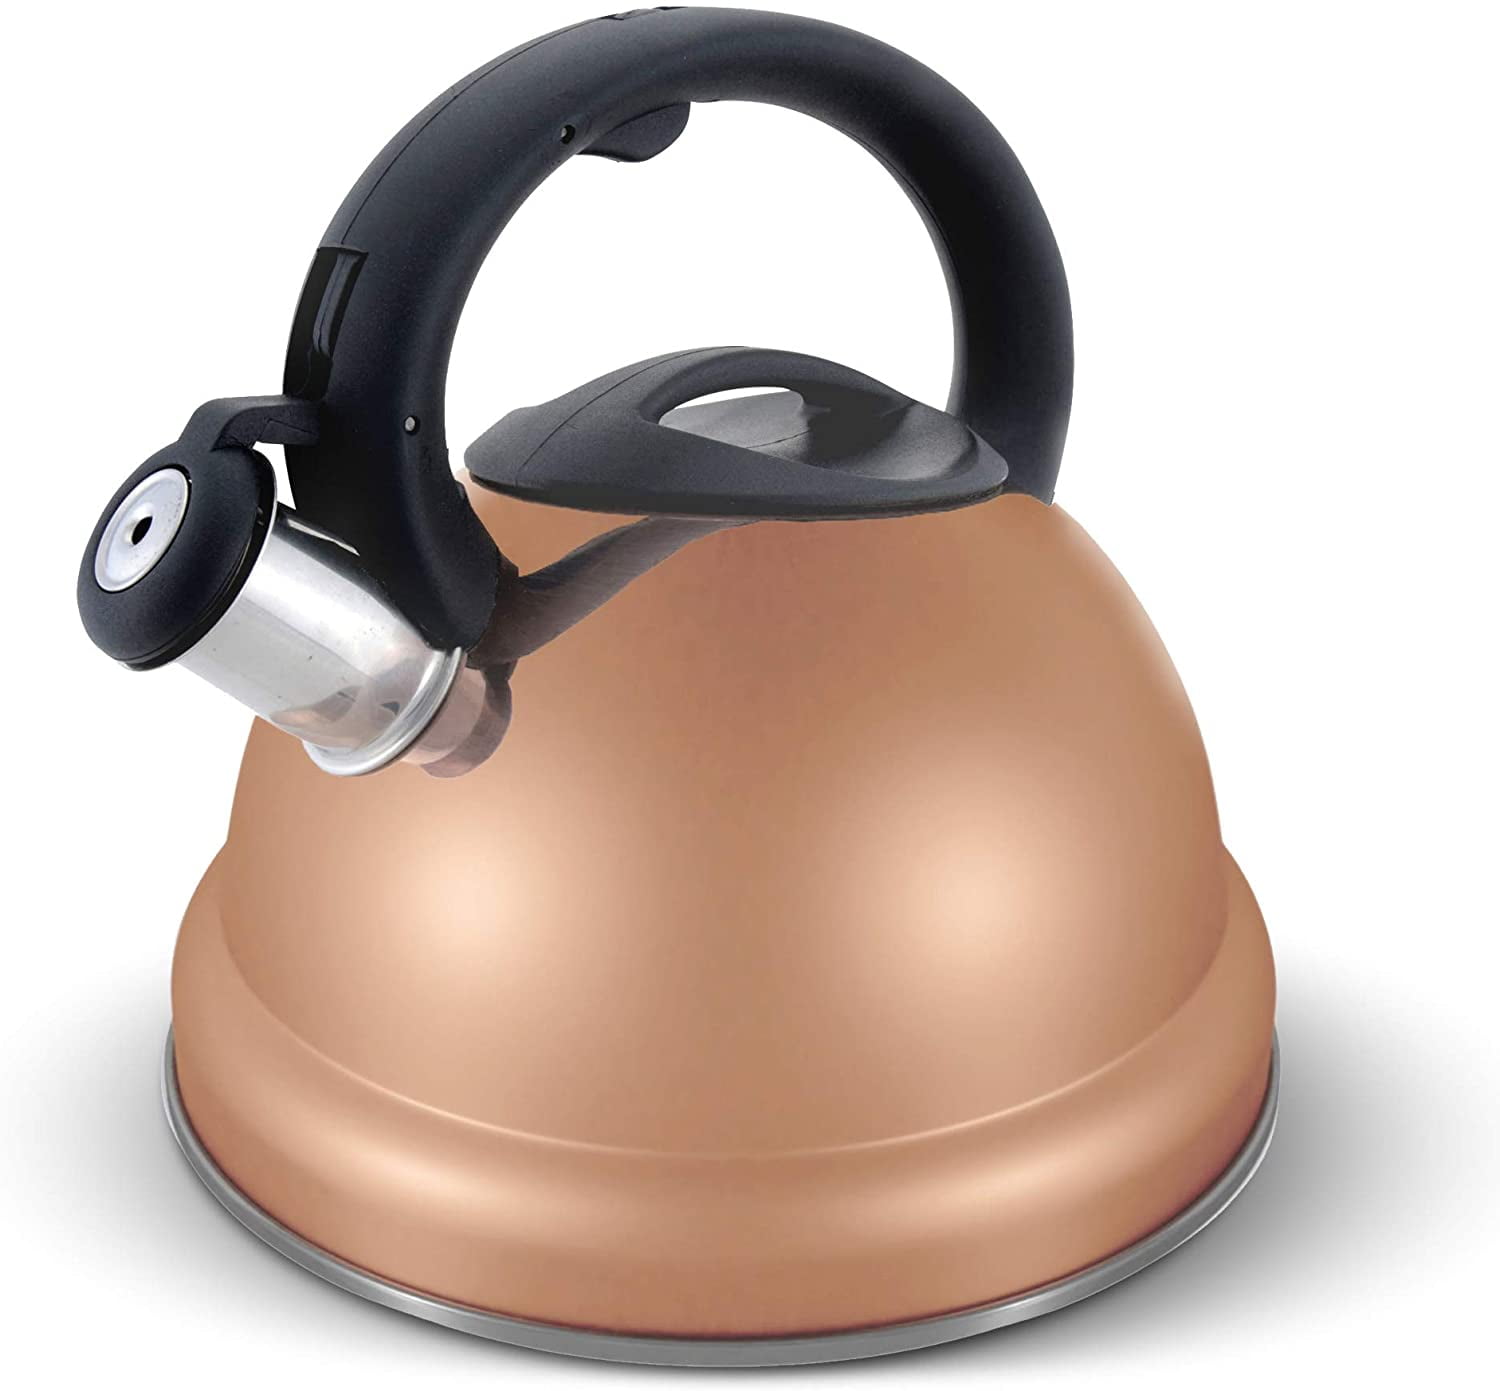 Elitra Home Stove Top Whistling Fancy Tea Kettle - Stainless Steel Tea Pot with Ergonomic Handle - 2.7 Quart / 2.6 Liter,Black